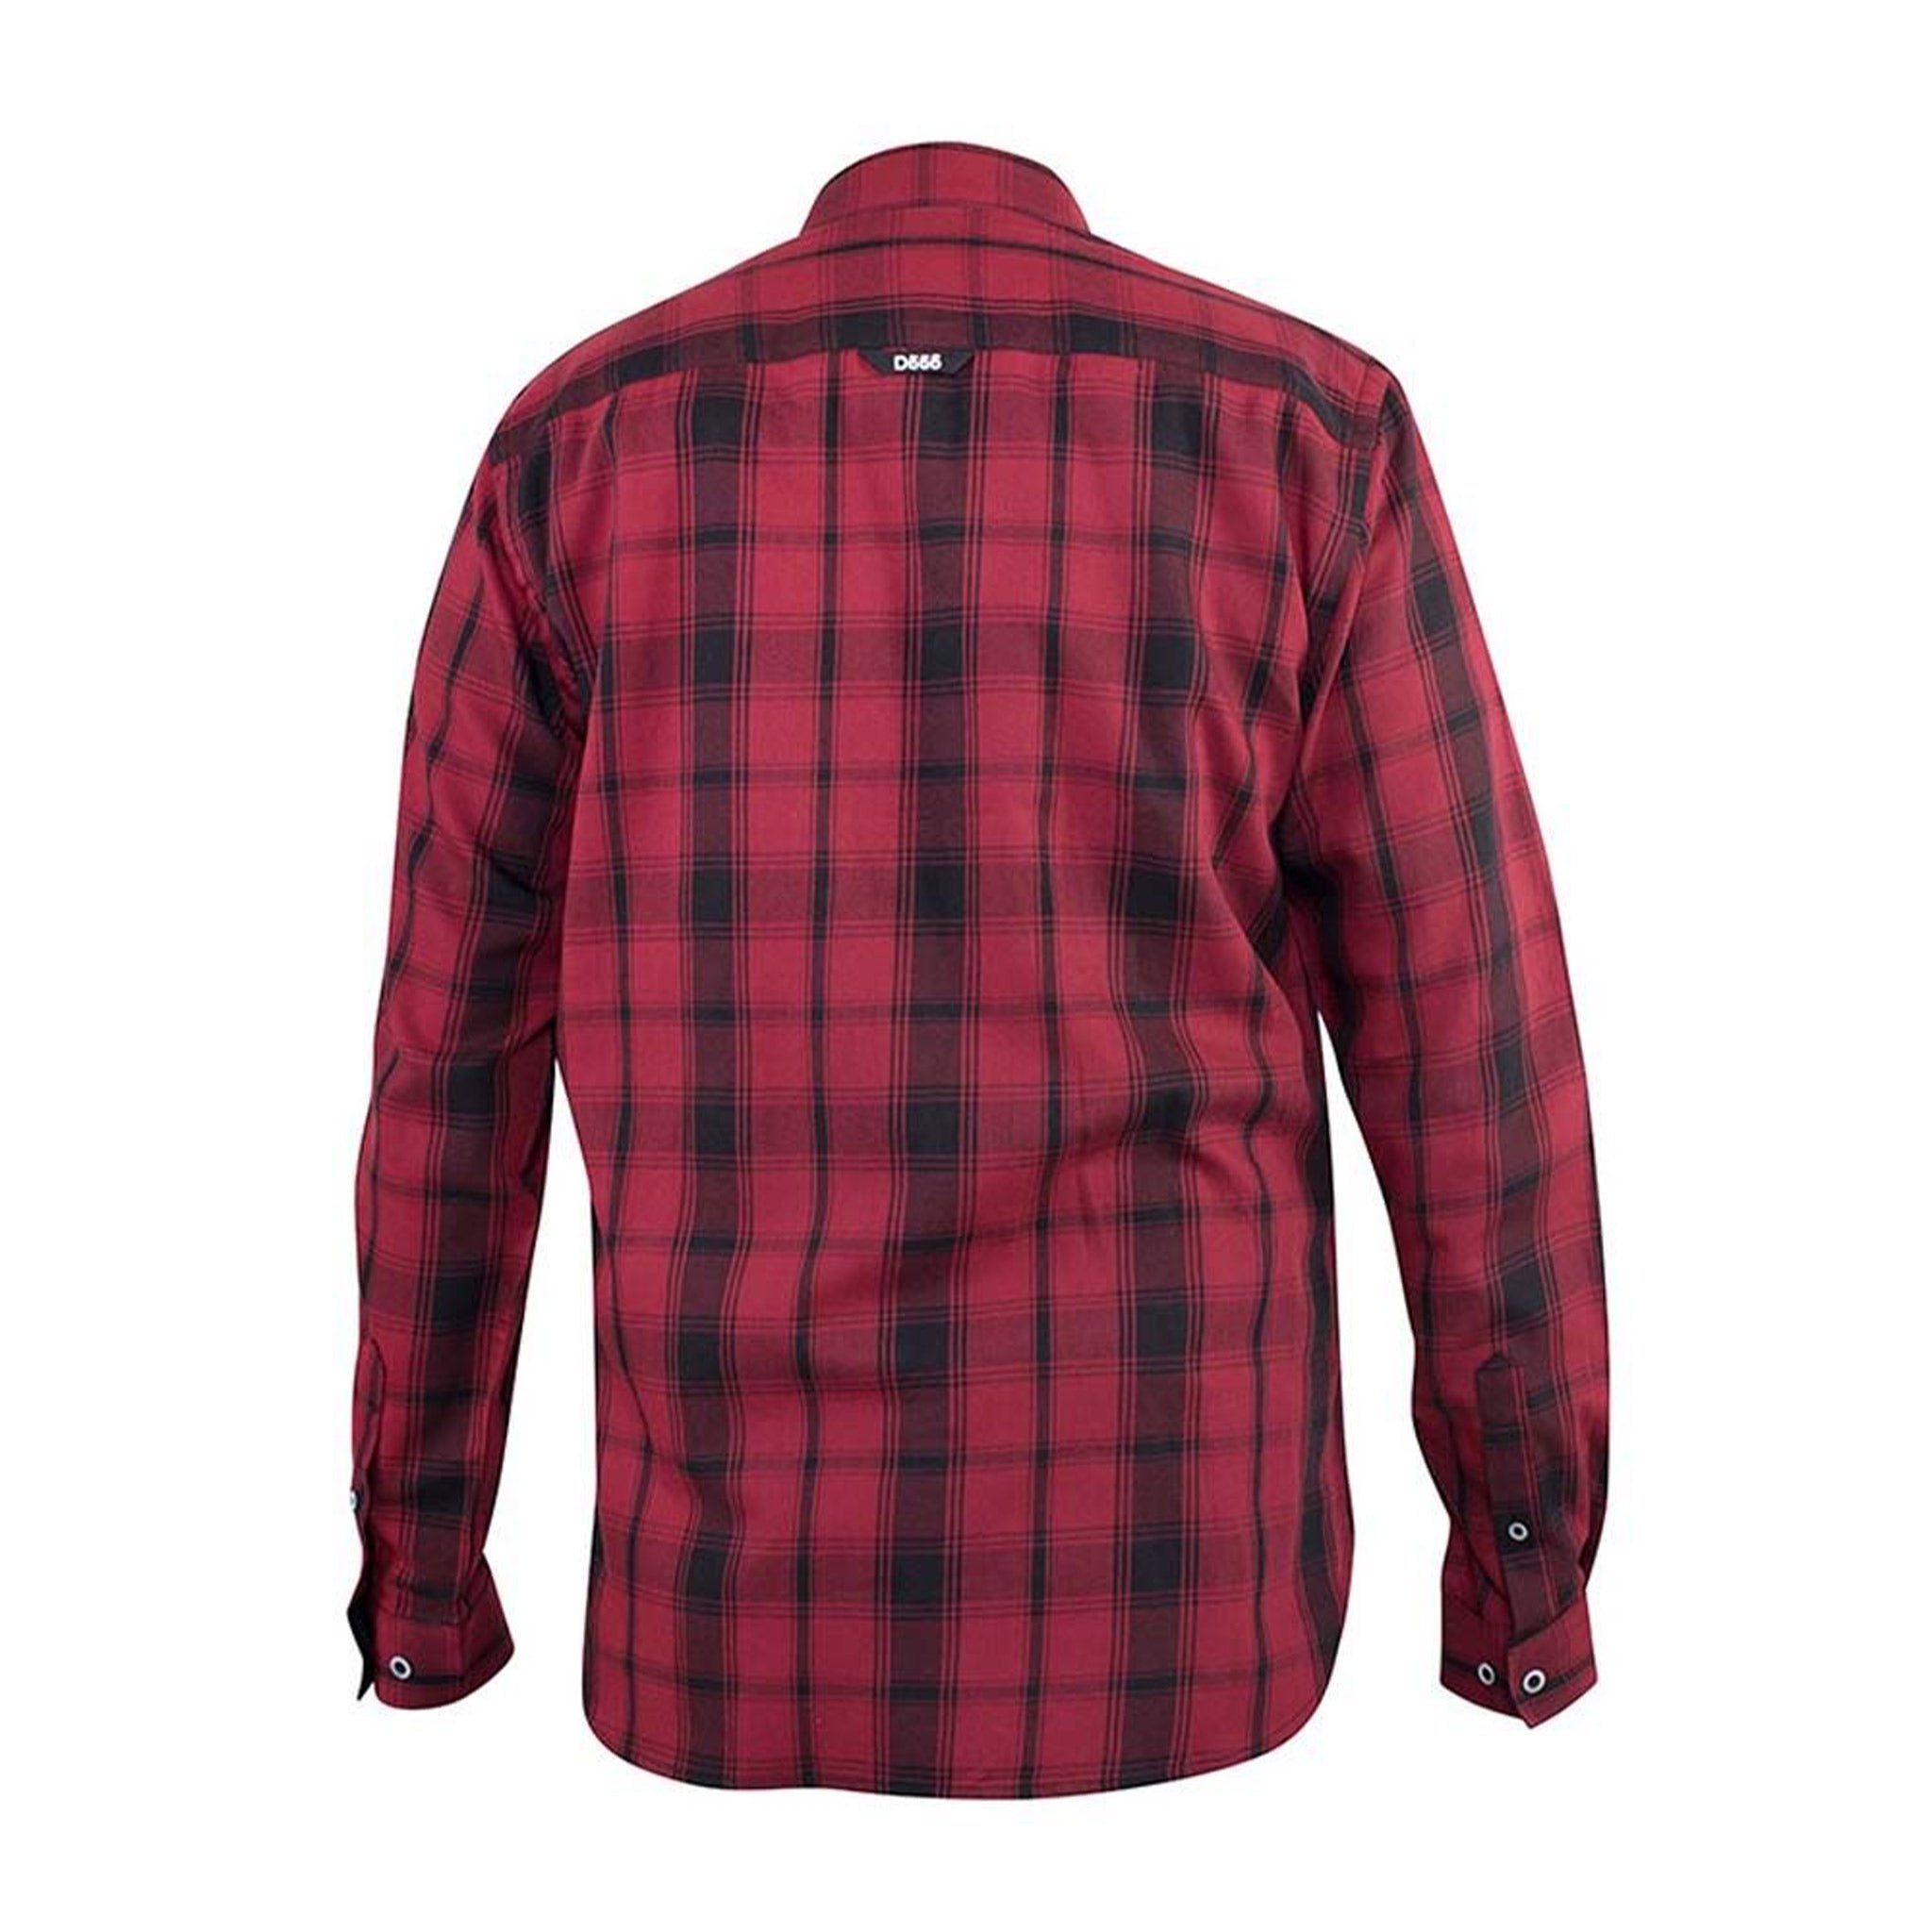 D555 Check Shirt - Benalla Red/Black